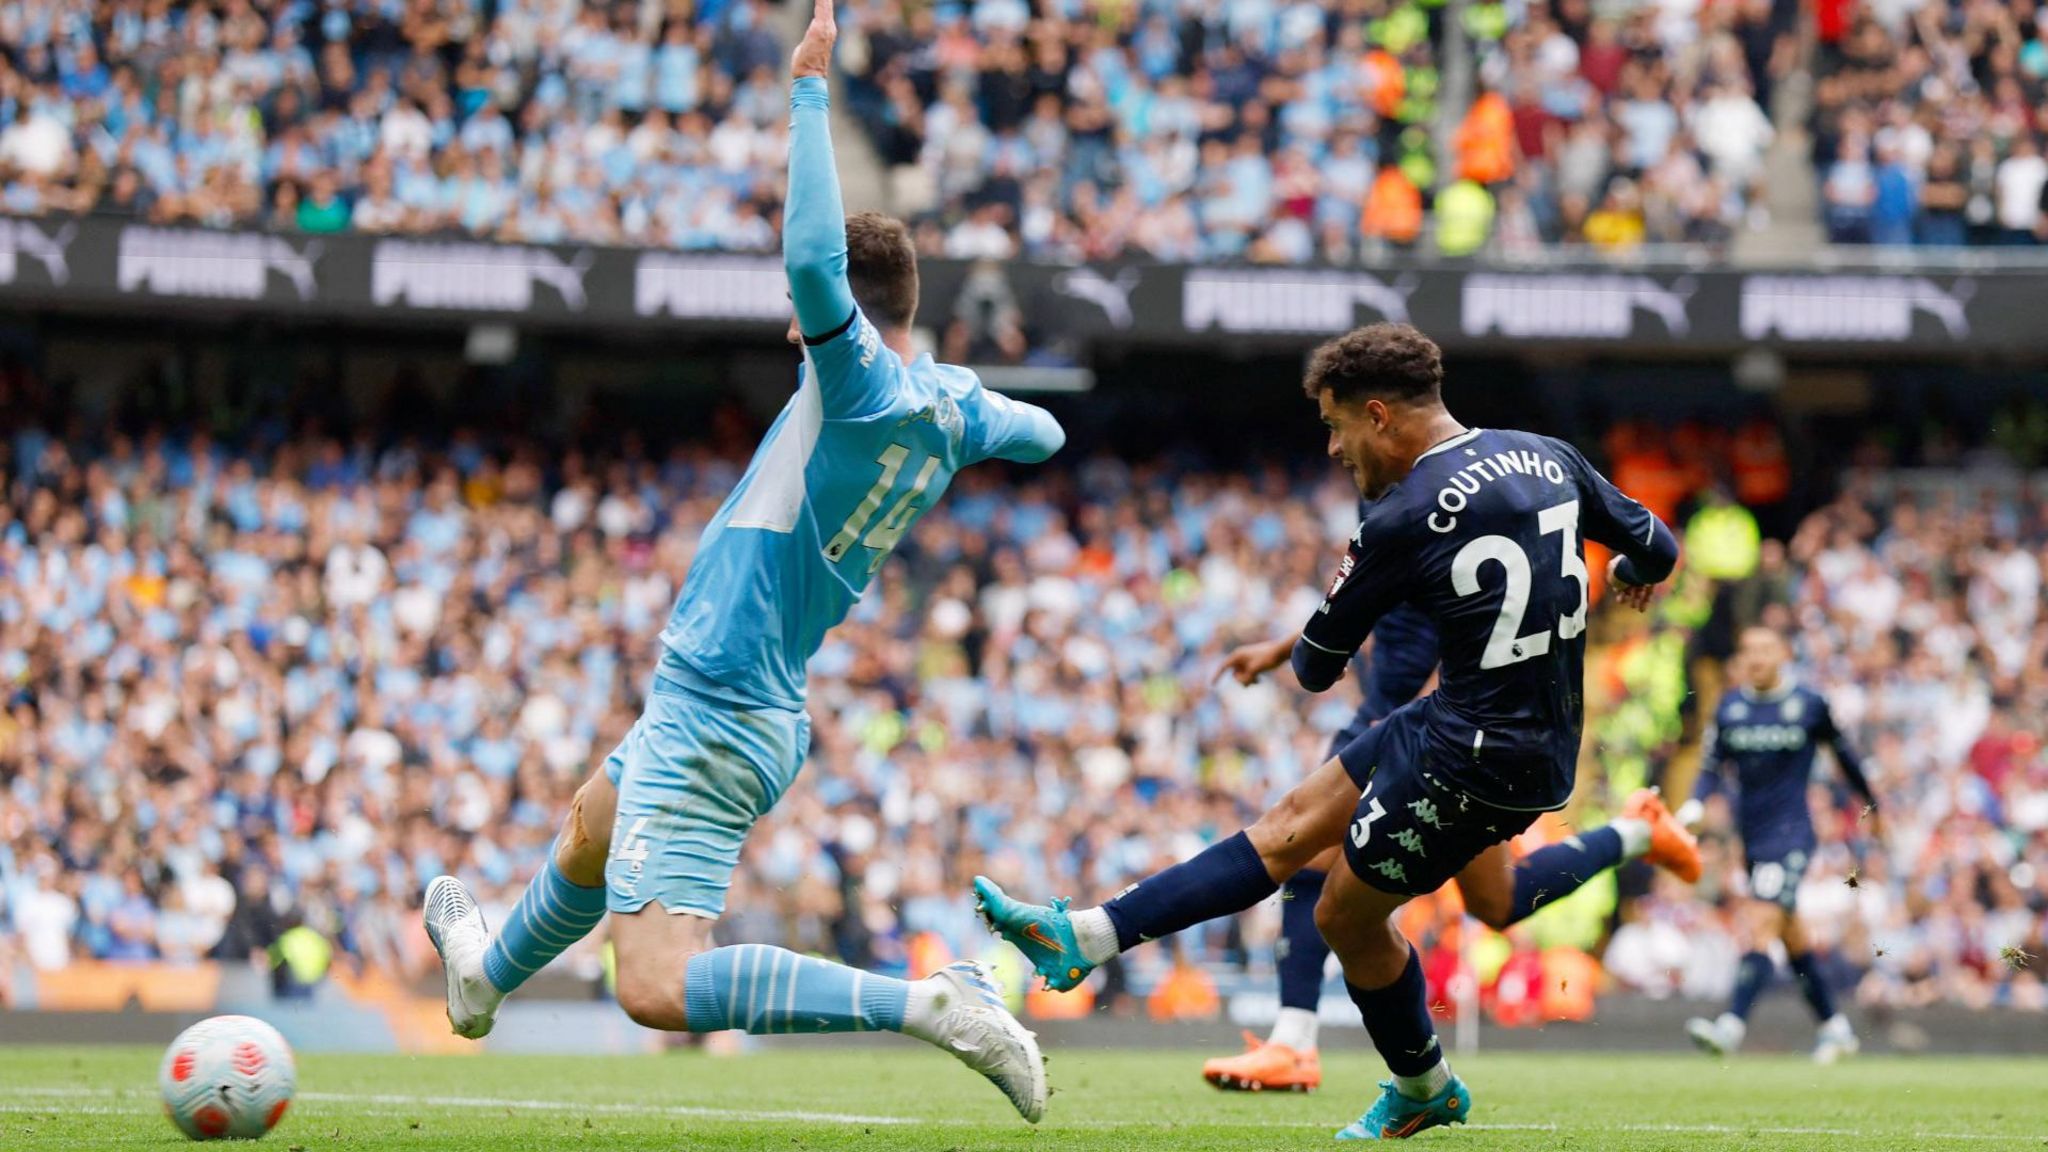 Manchester City 3-2 Aston Villa - Goals and highlights - Premier